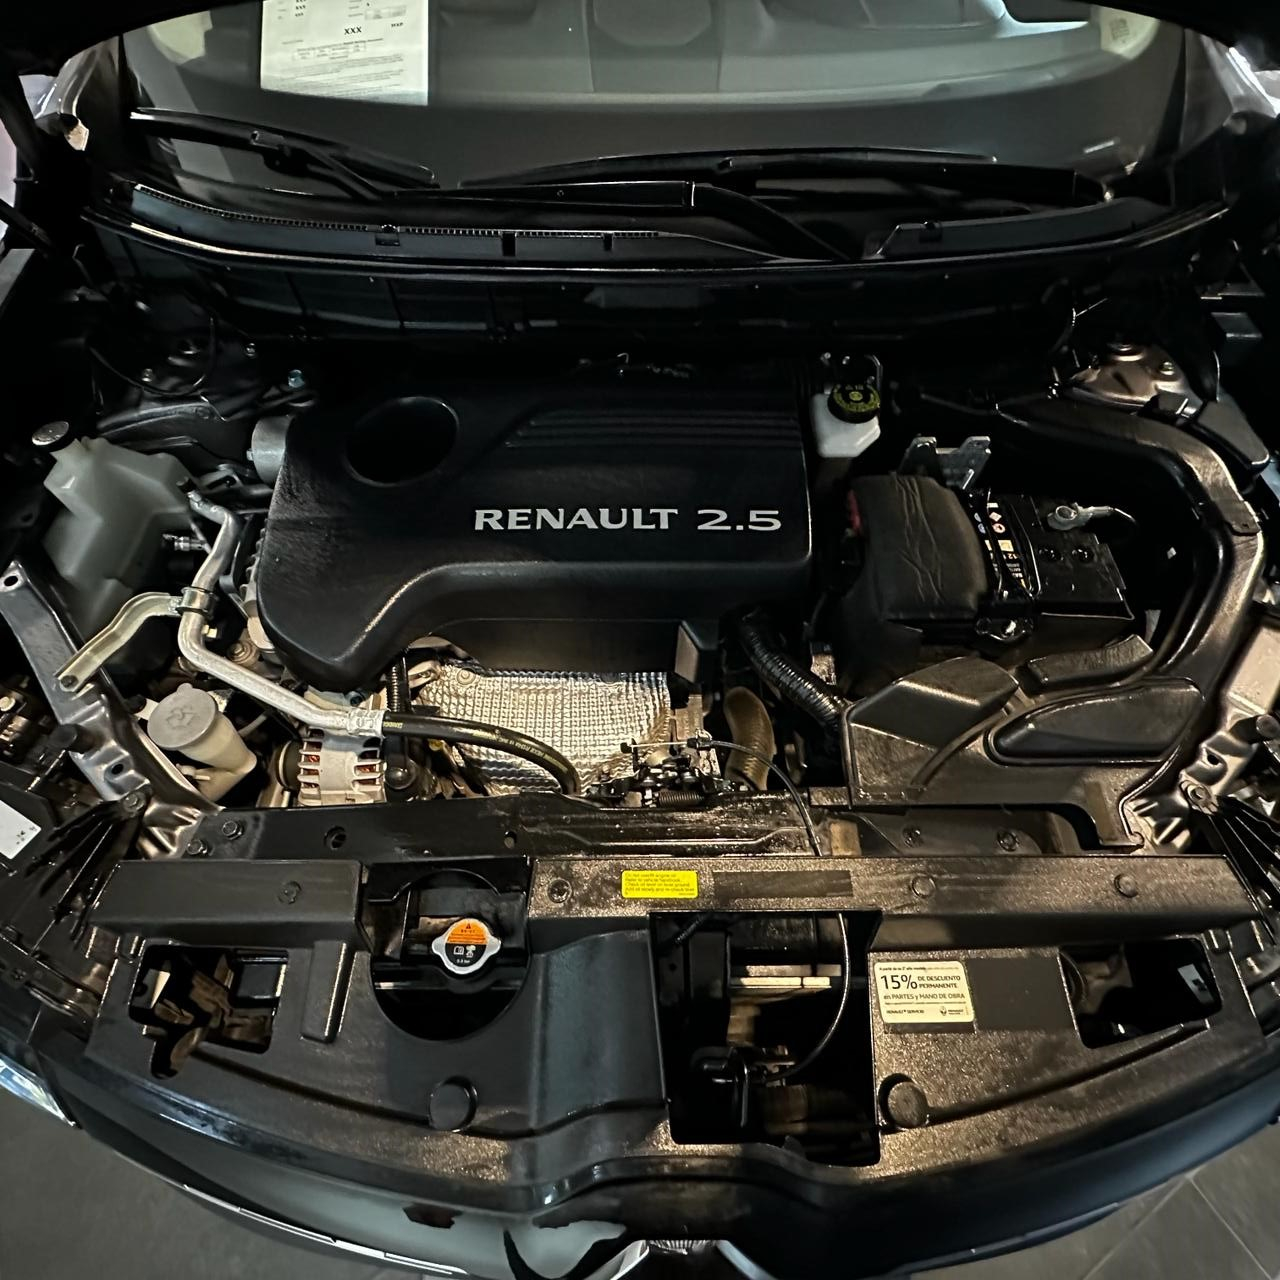 2018 Renault Koleos Vud